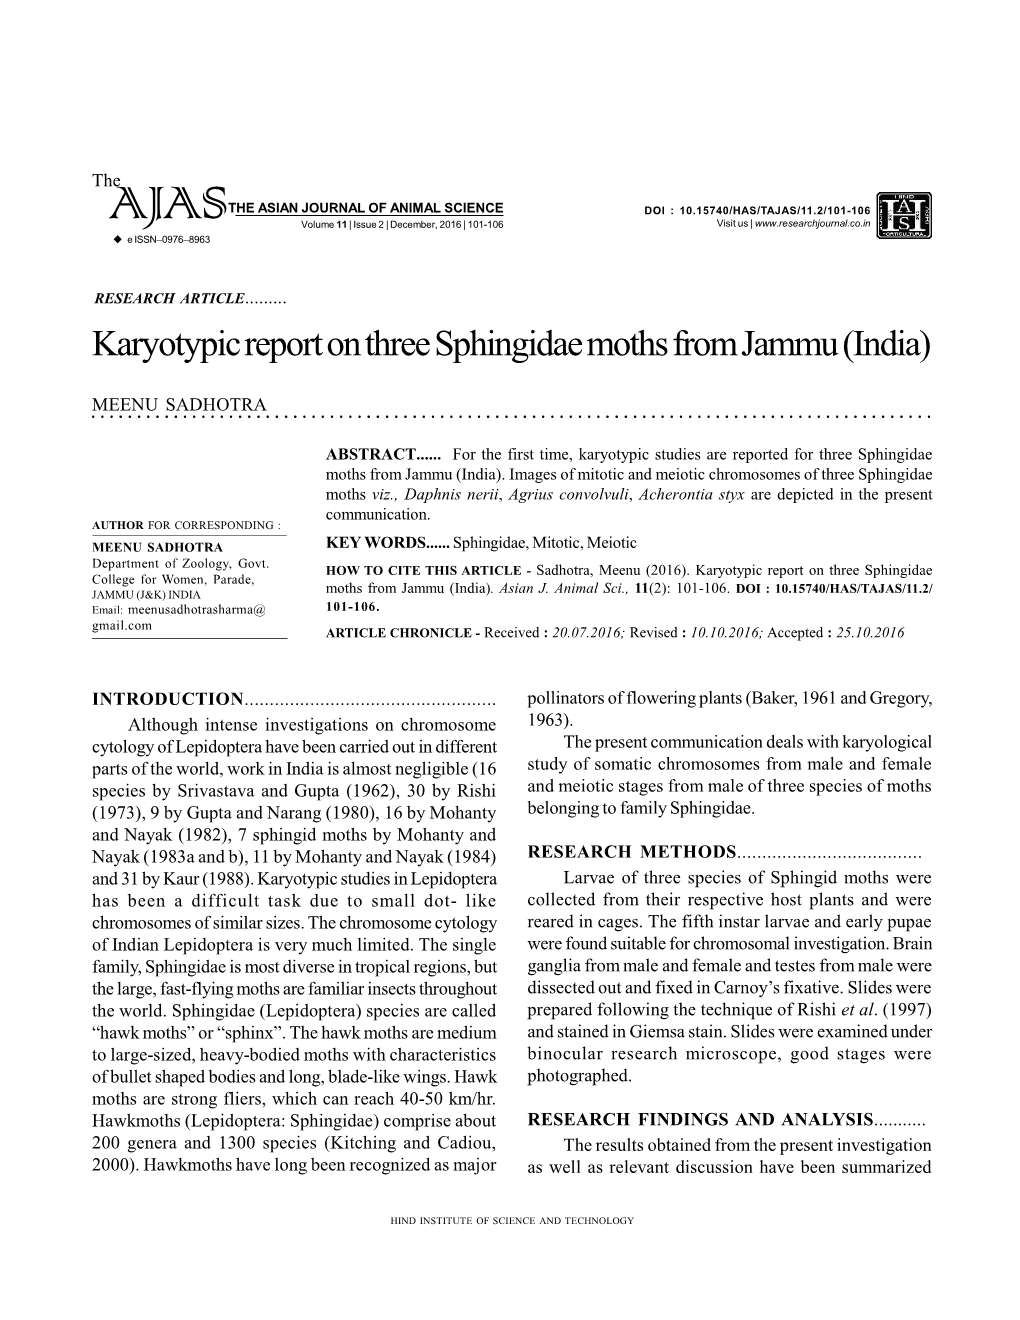 Karyotypic Report on Three Sphingidae Moths from Jammu (India)